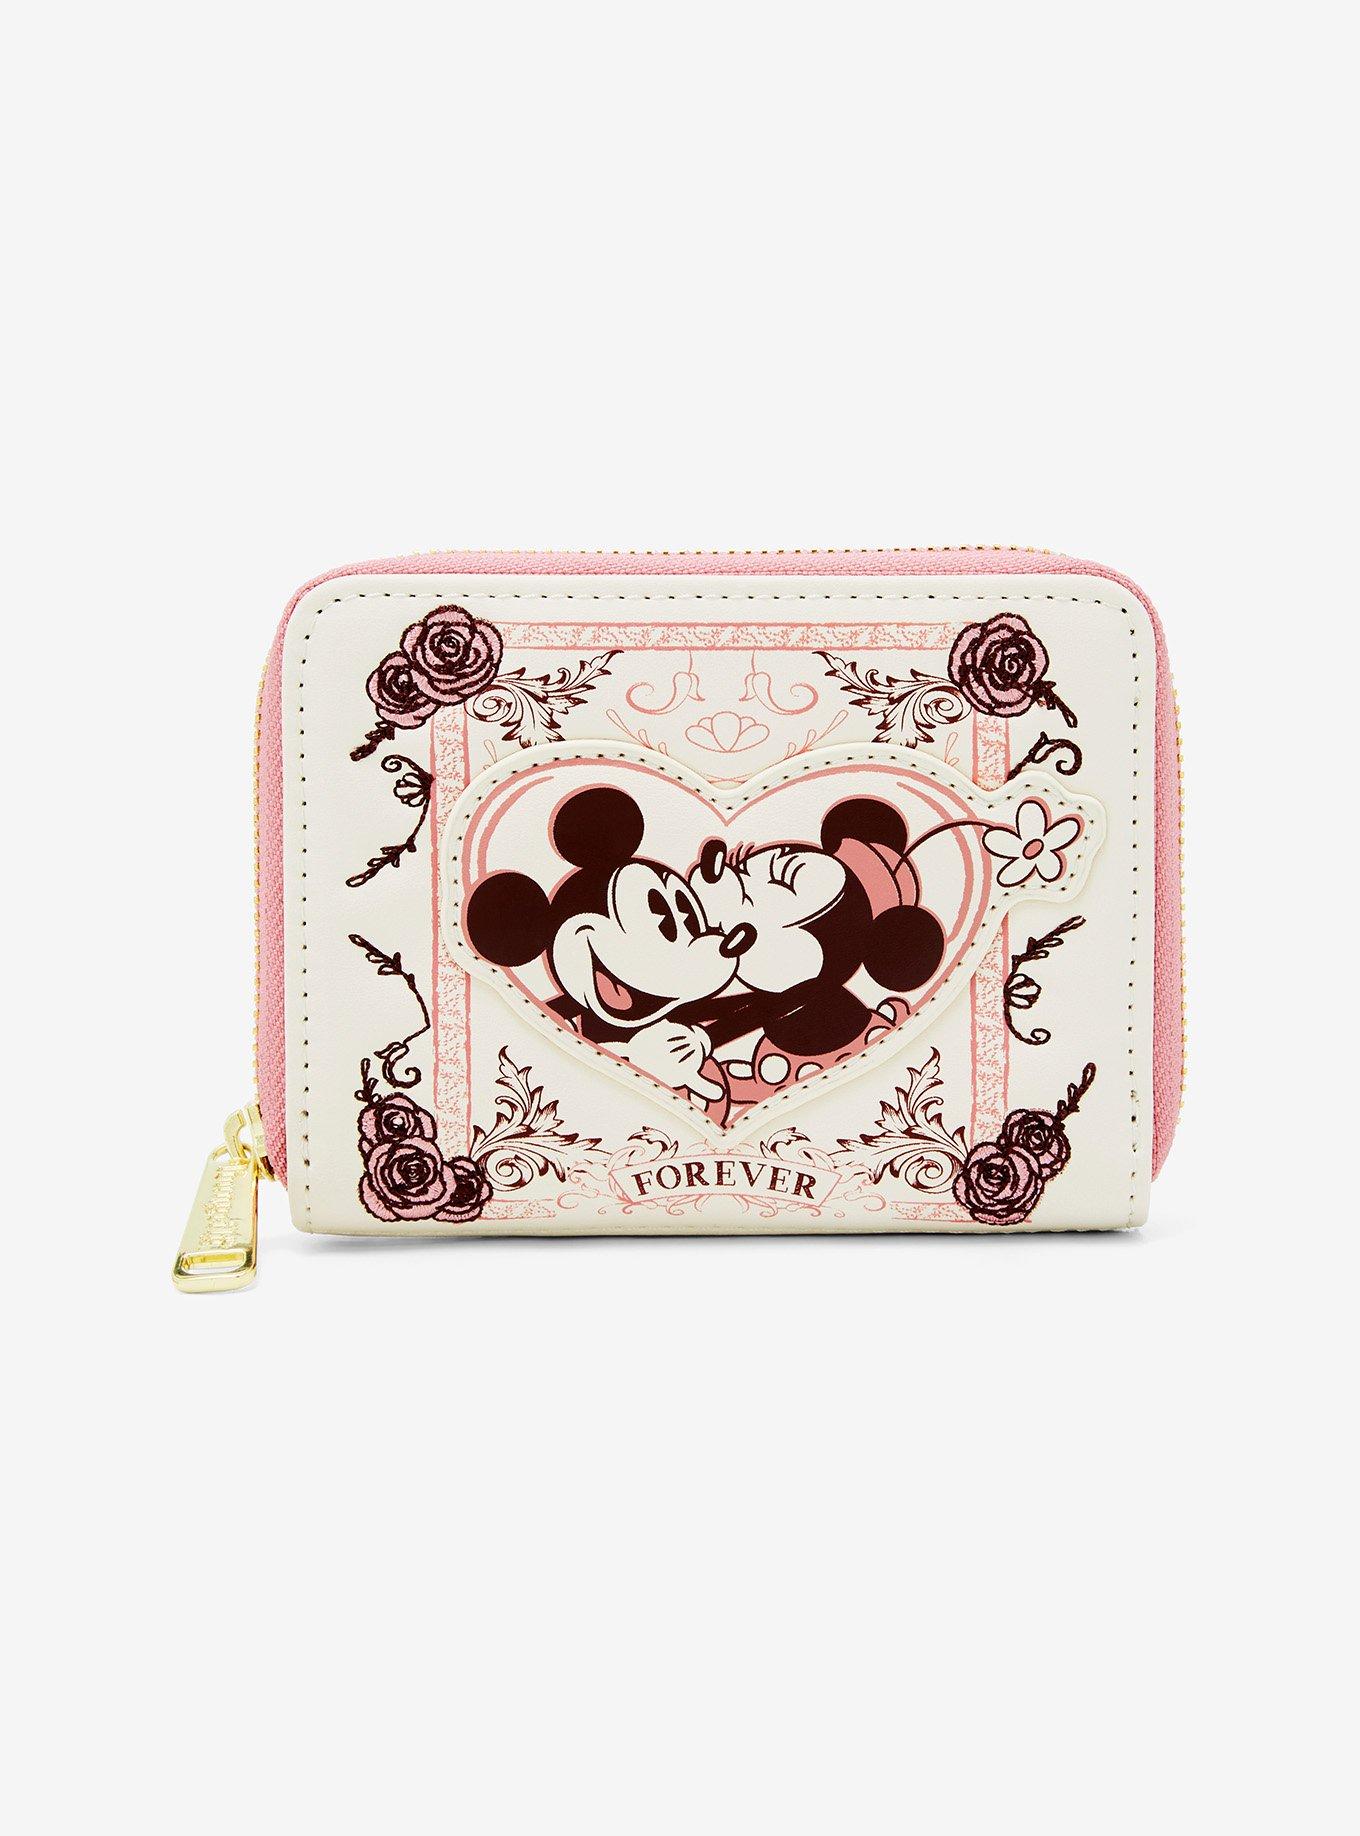 Minnie Mouse Zipper Wallet